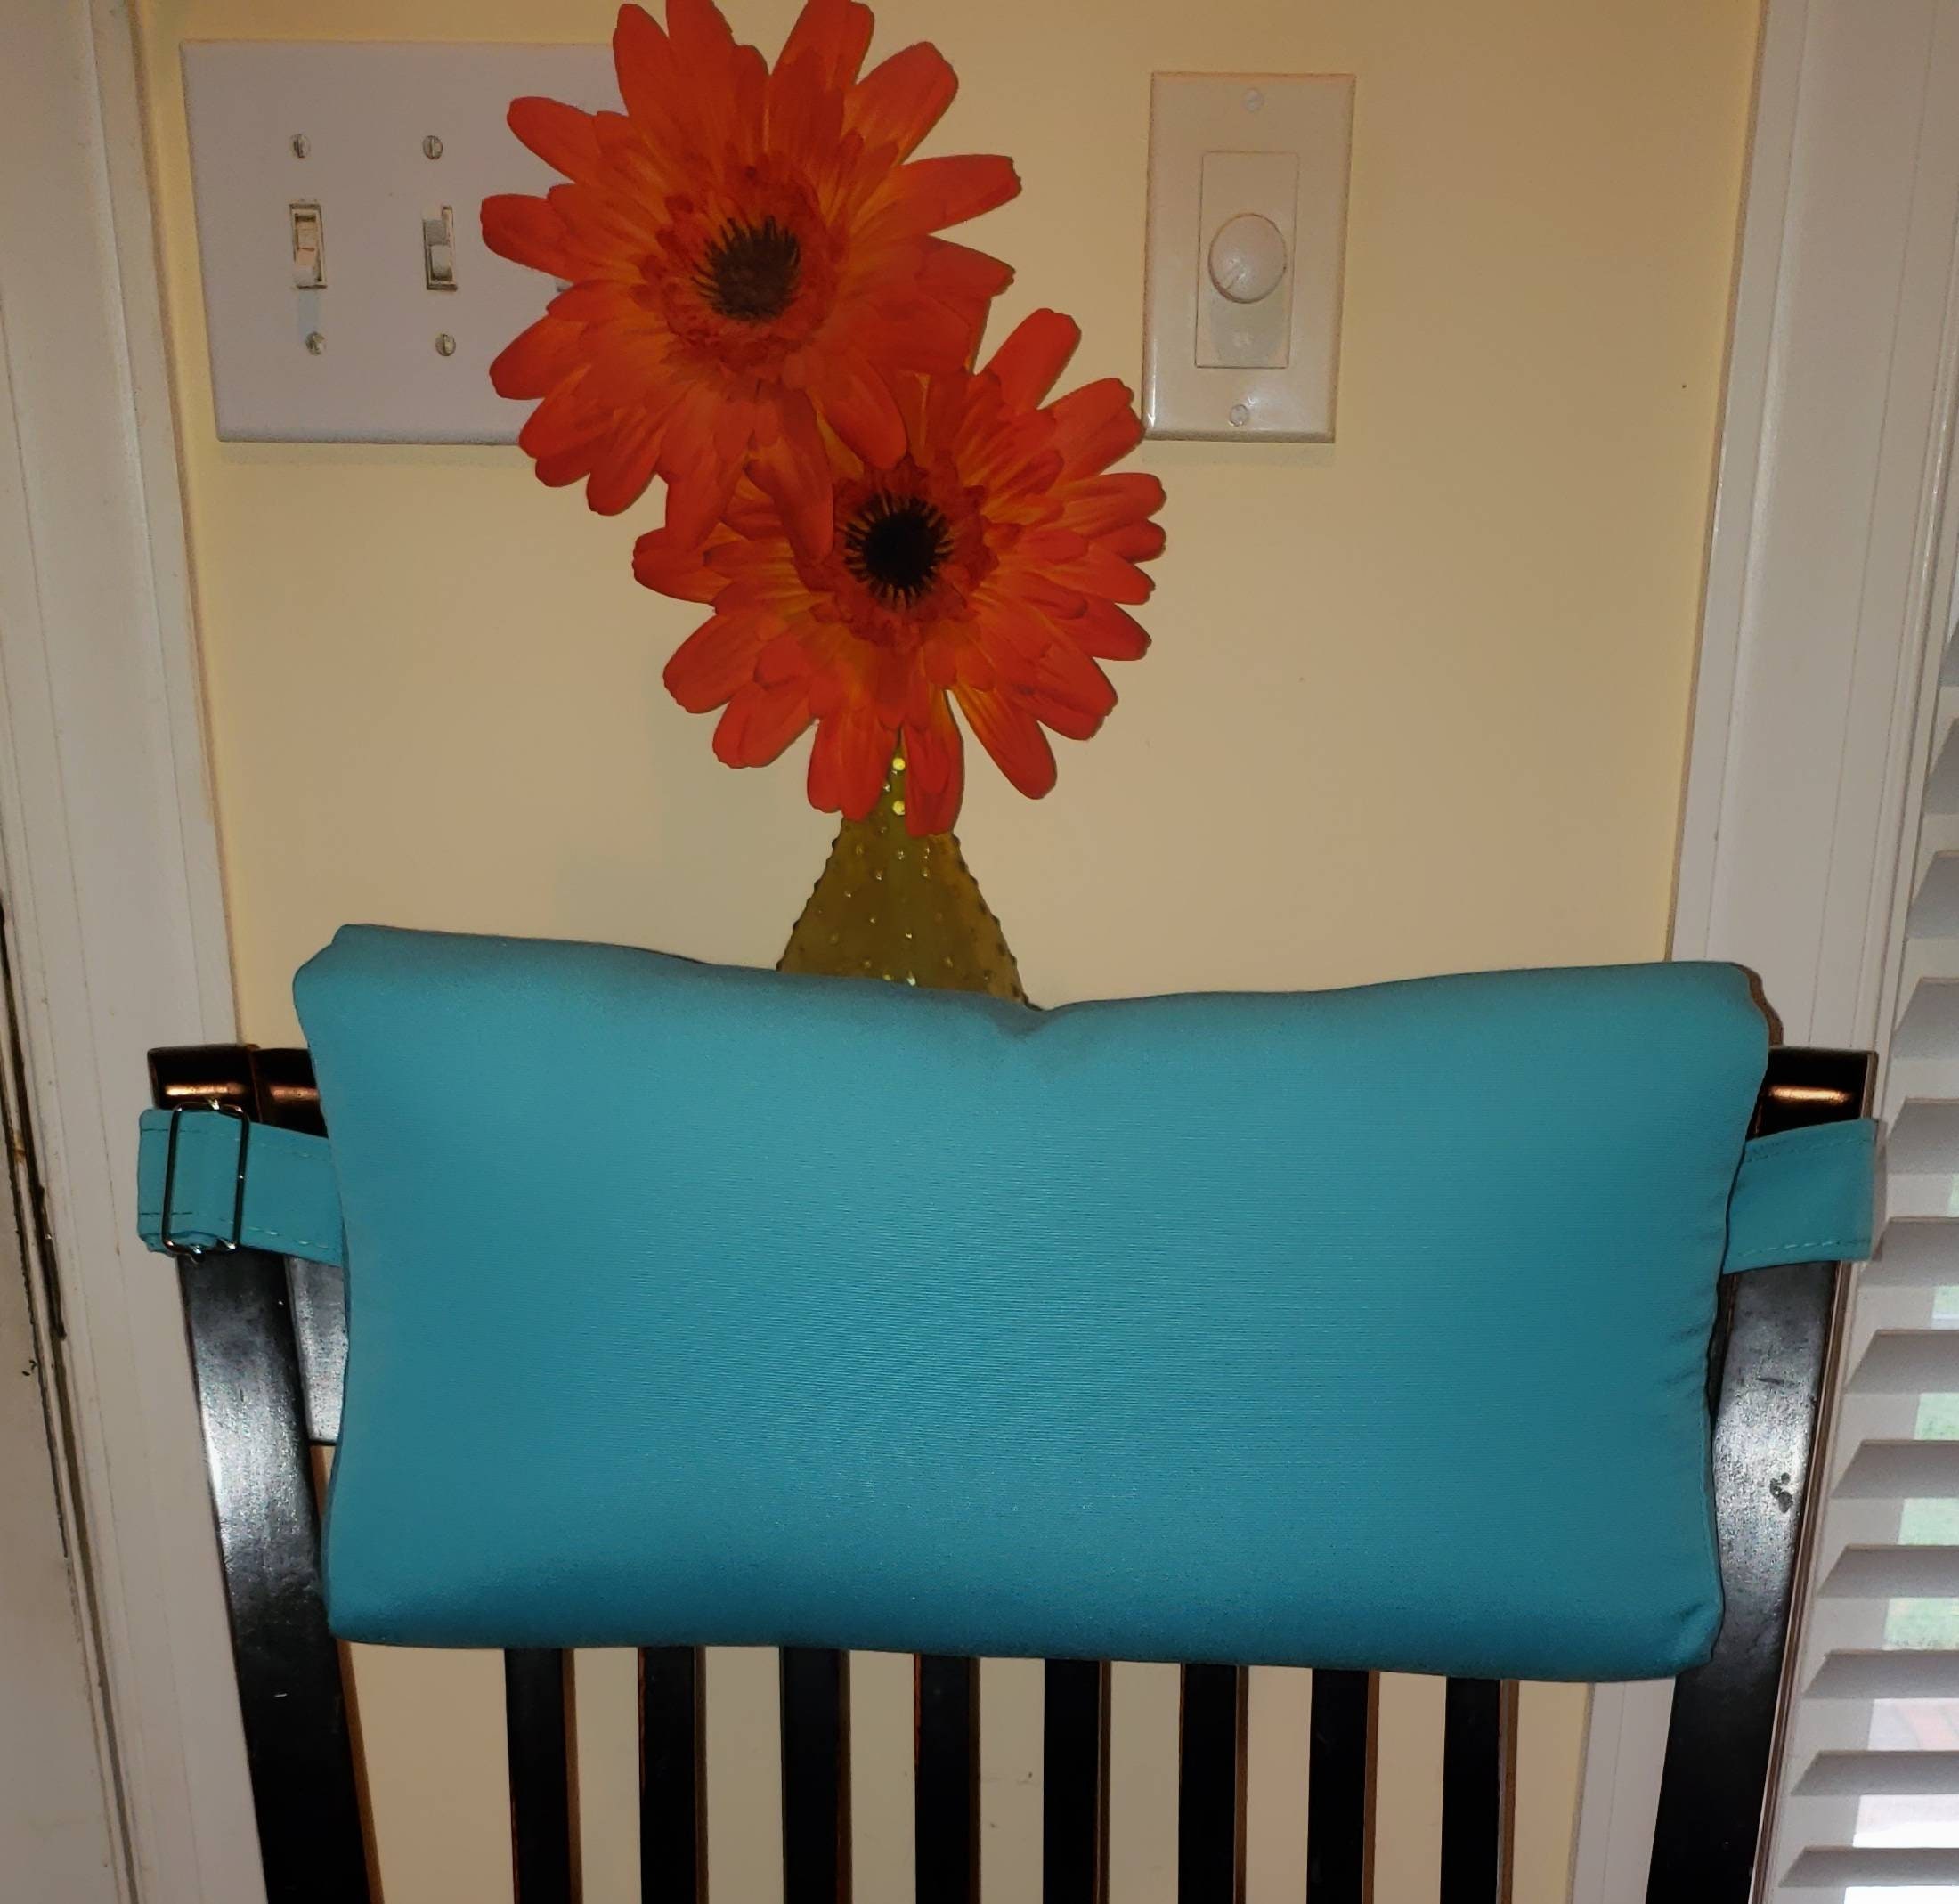 QJUHUNG Recliner Pillow Head Cushion for Outdoor Folding Chair